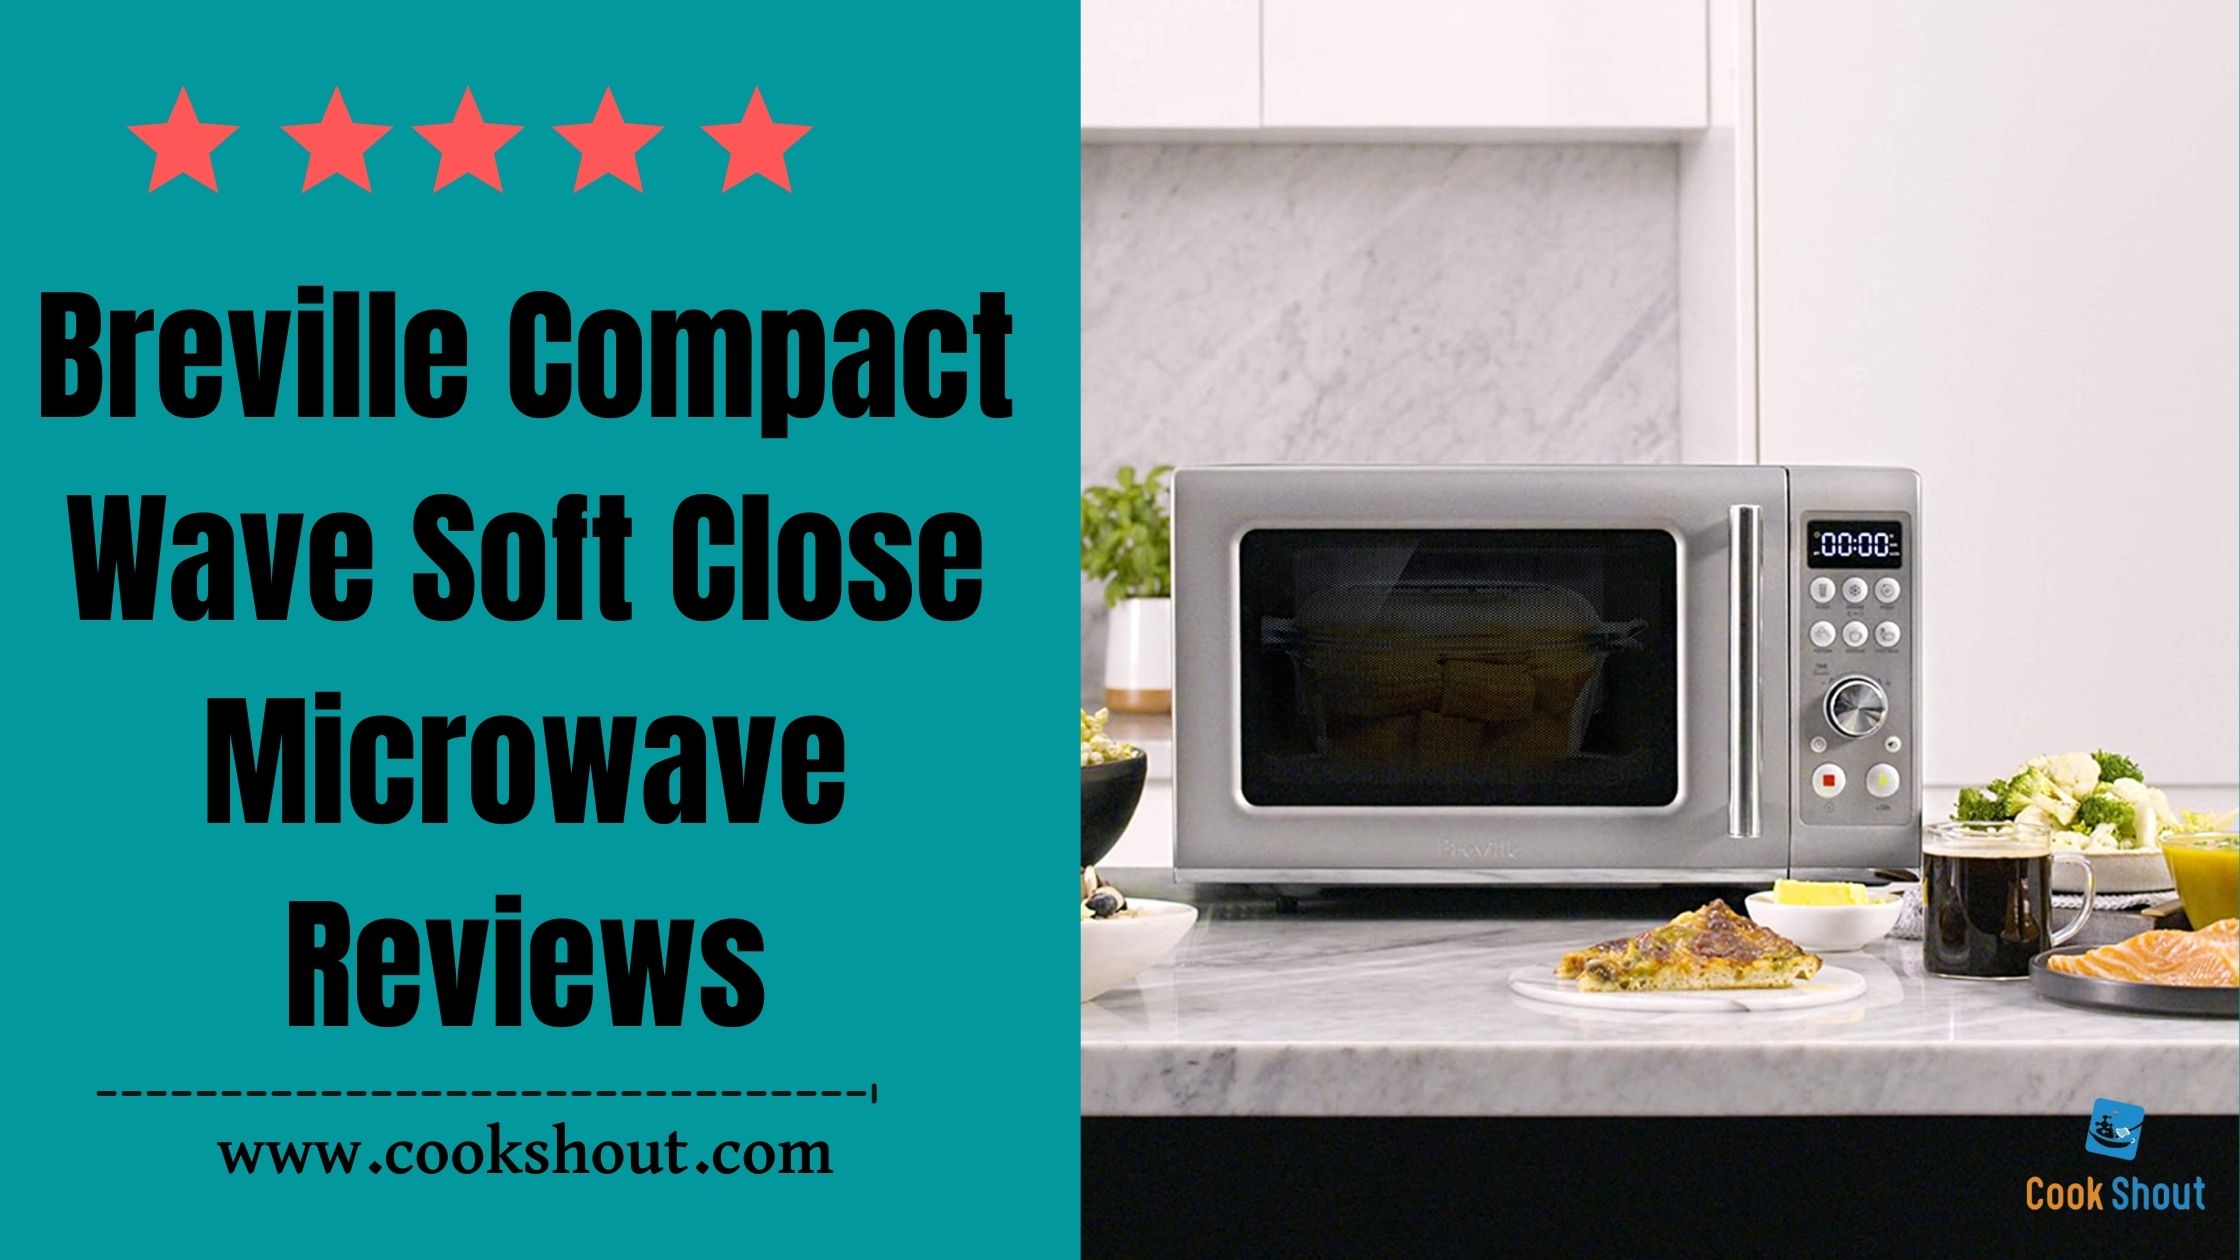 Breville Compact Wave Soft Close Microwave Reviews